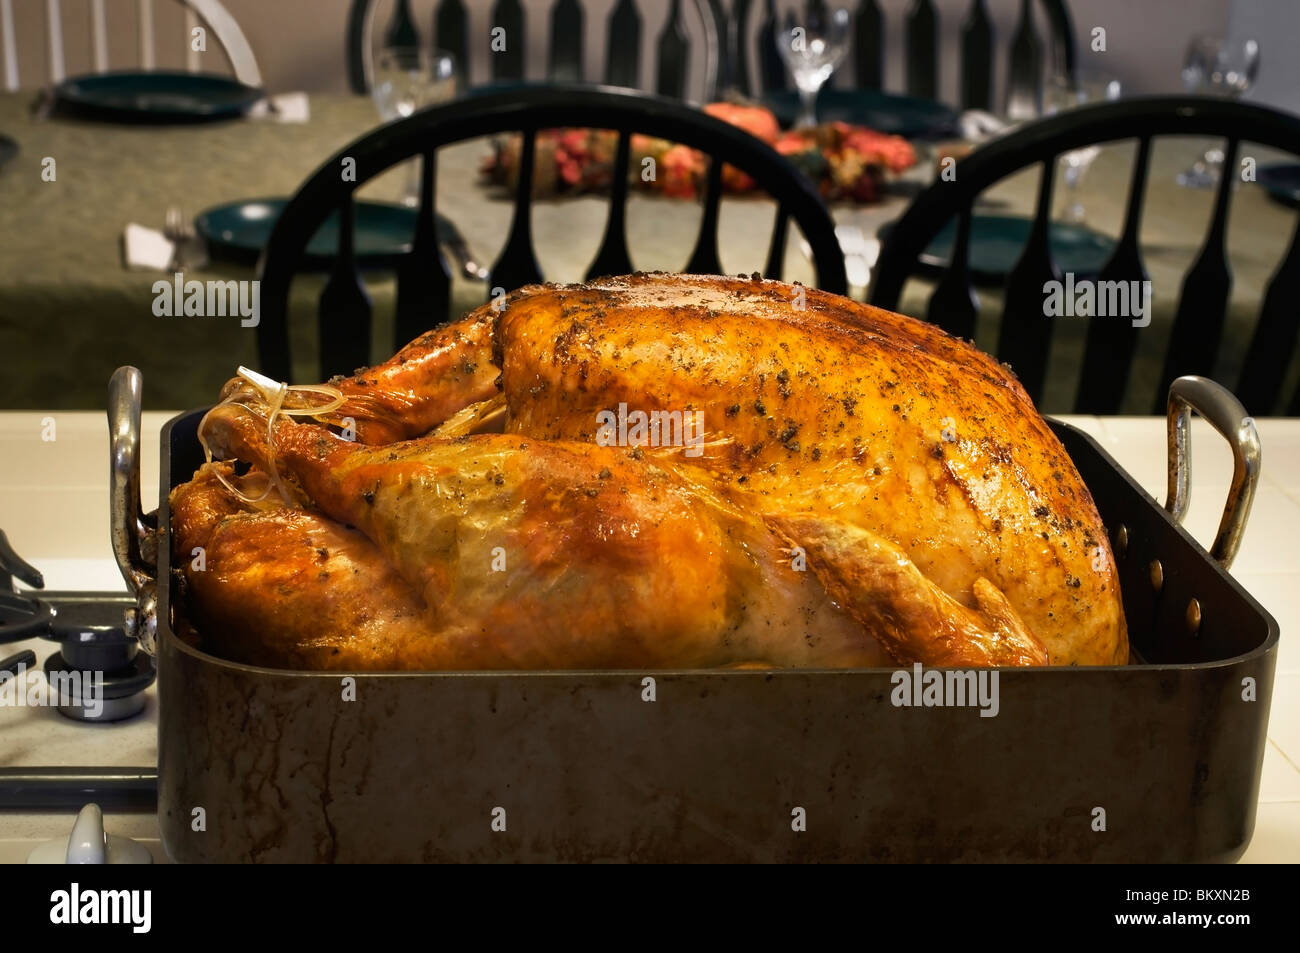 https://c8.alamy.com/comp/BKXN2B/a-beautifully-roasted-turkey-still-in-the-roasting-pan-is-ready-to-BKXN2B.jpg